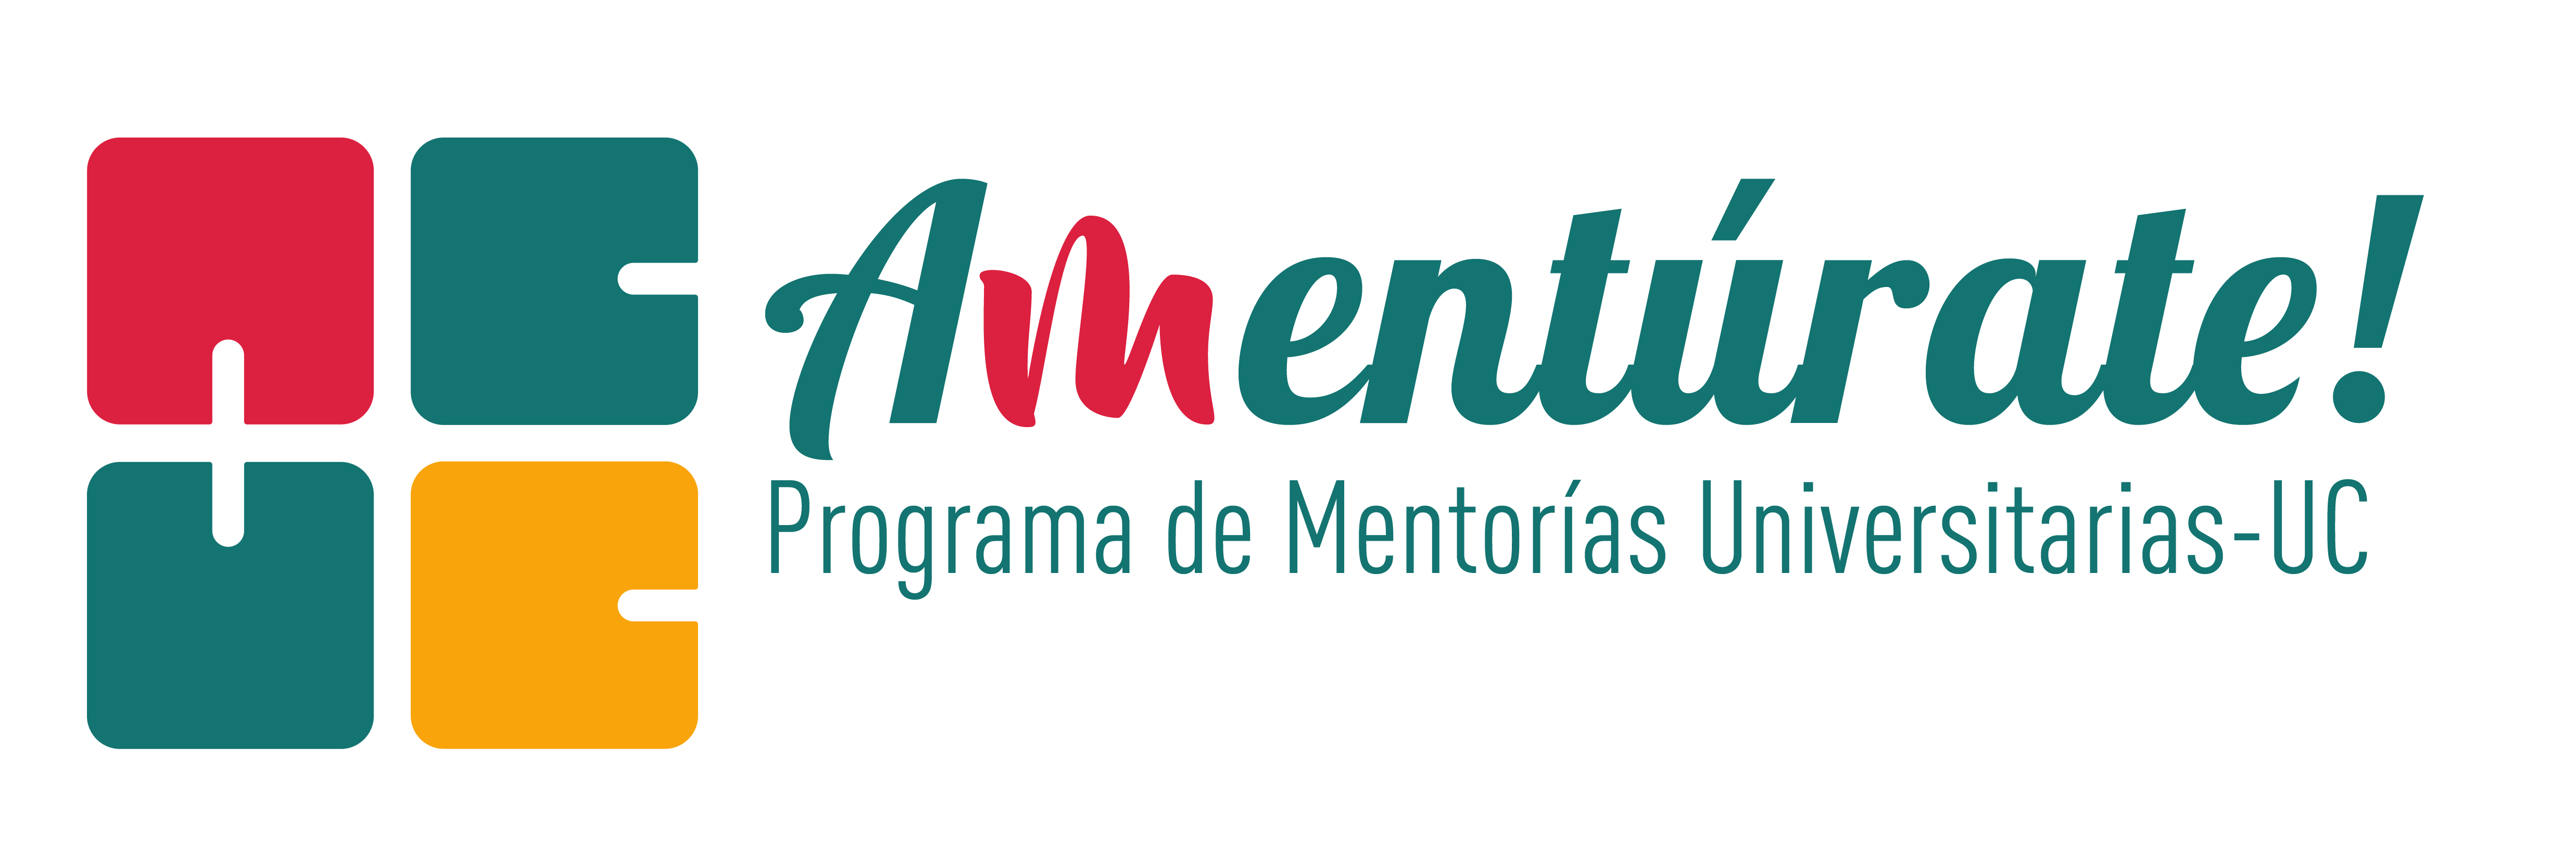 Programa de mentorÃ­as universitarias "AmentÃºrate"